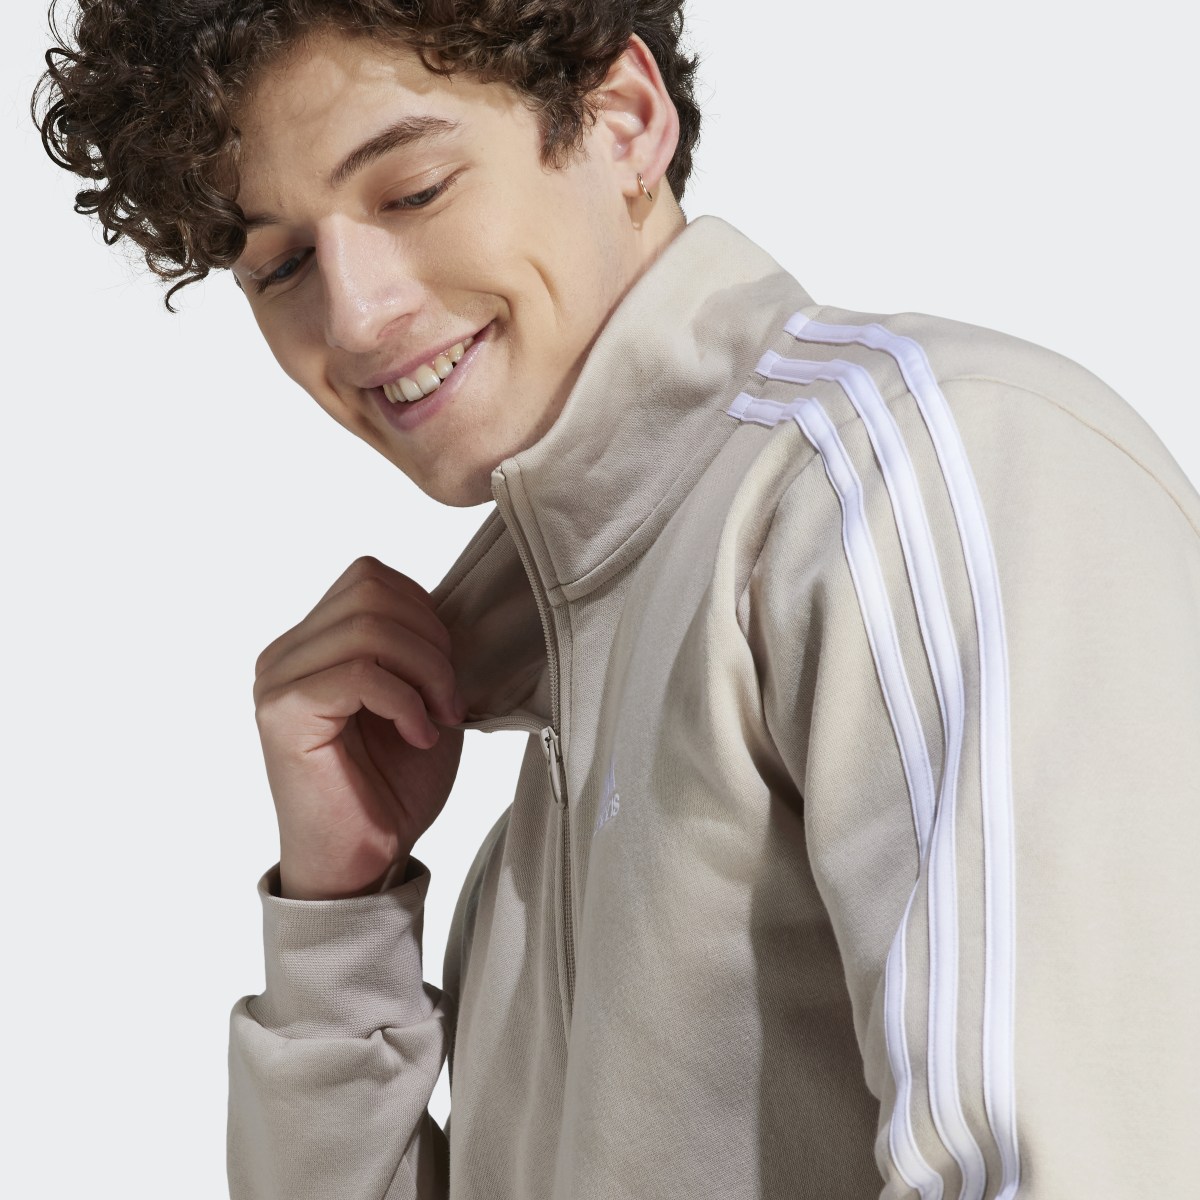 Adidas Basic 3-Stripes Fleece Track Suit. 8